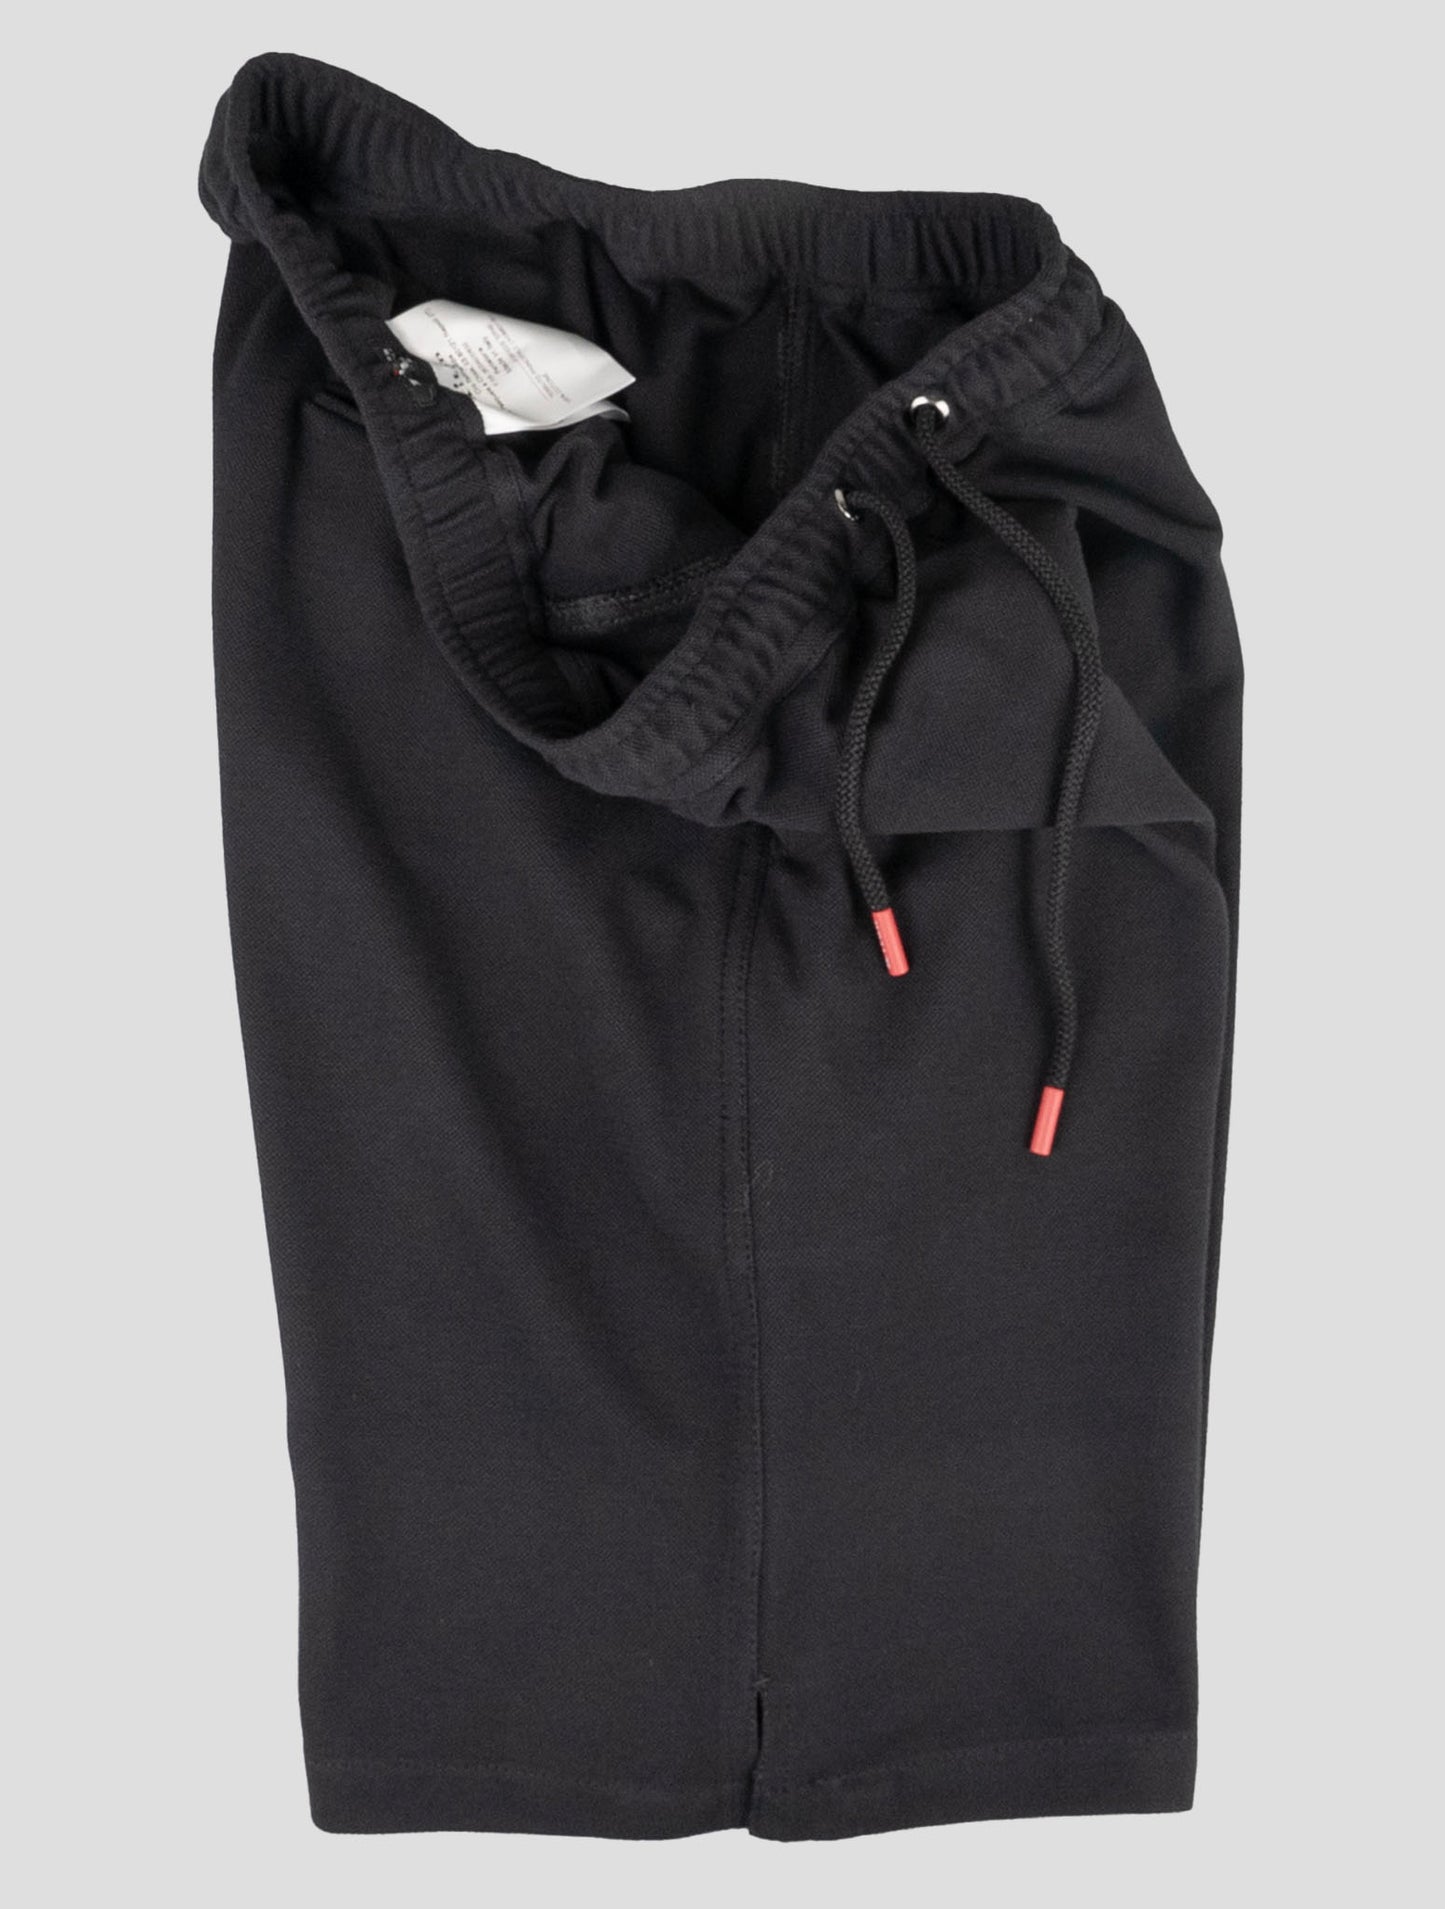 Kiton Matching Outfit - Grå Umbi og sorte korte bukser træningsdragt